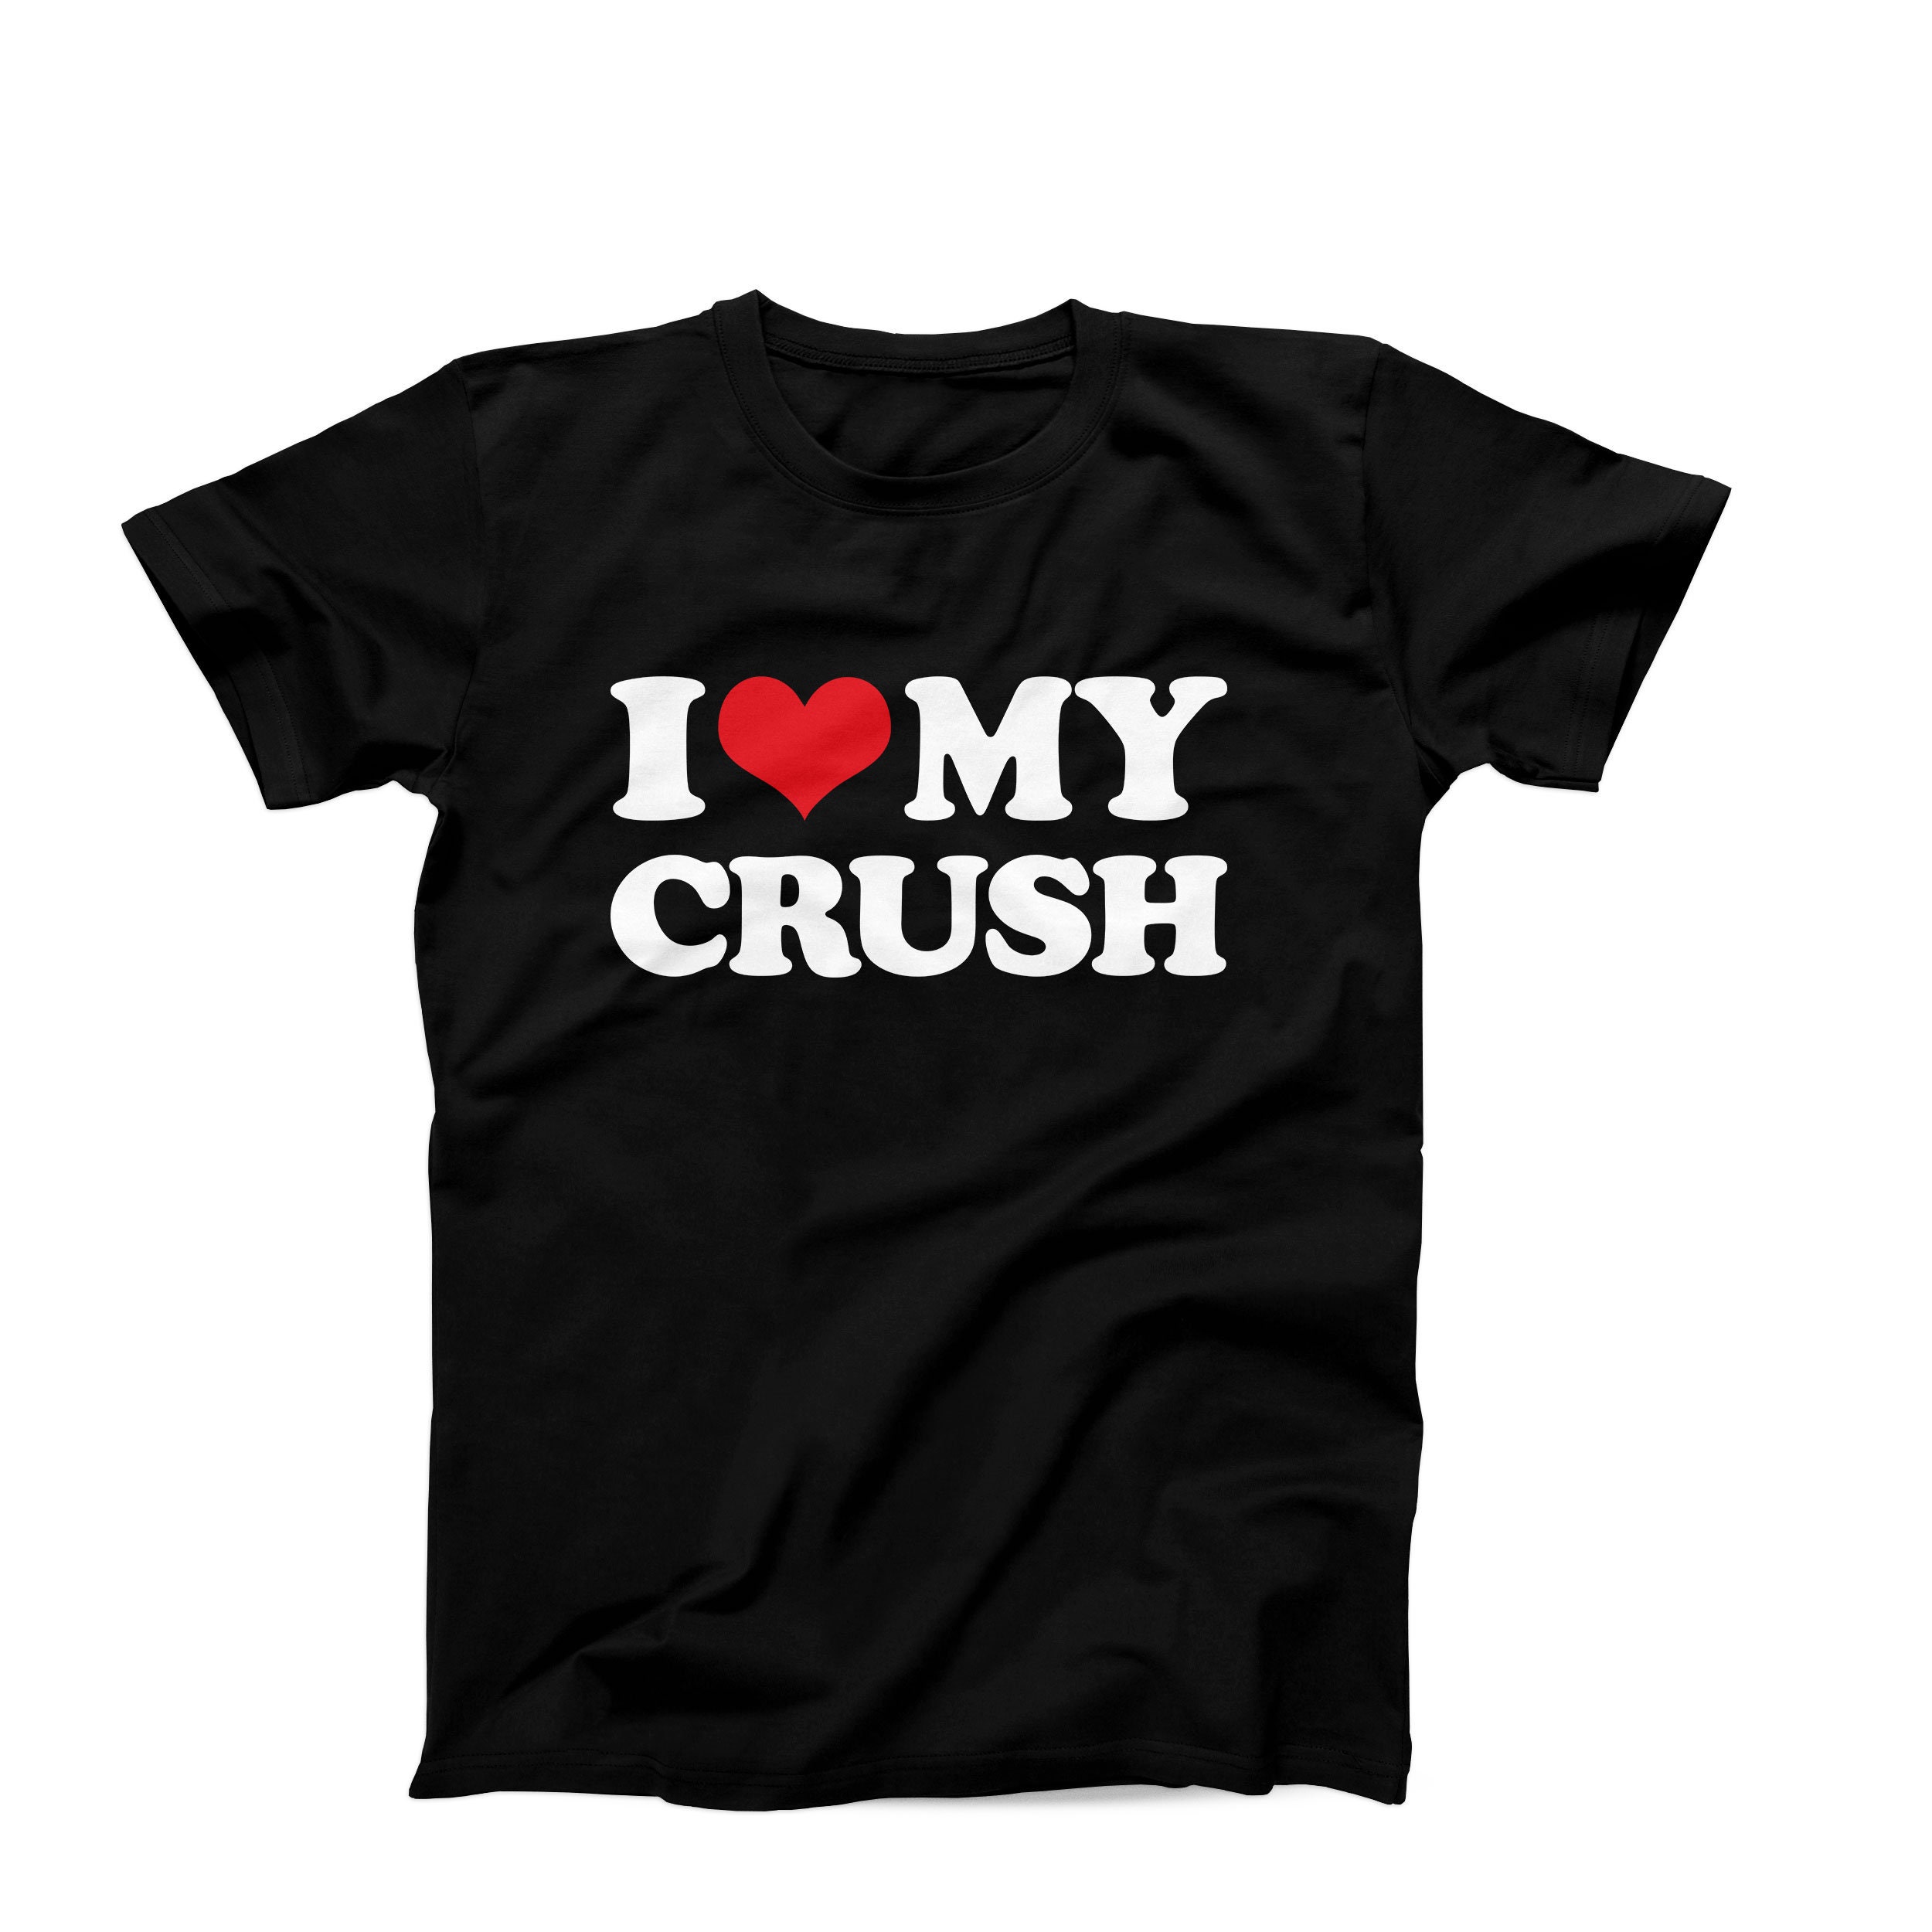 I Love My Crush T-shirt, I Heart My Crush Shirt, I Love Shirt, I Heart